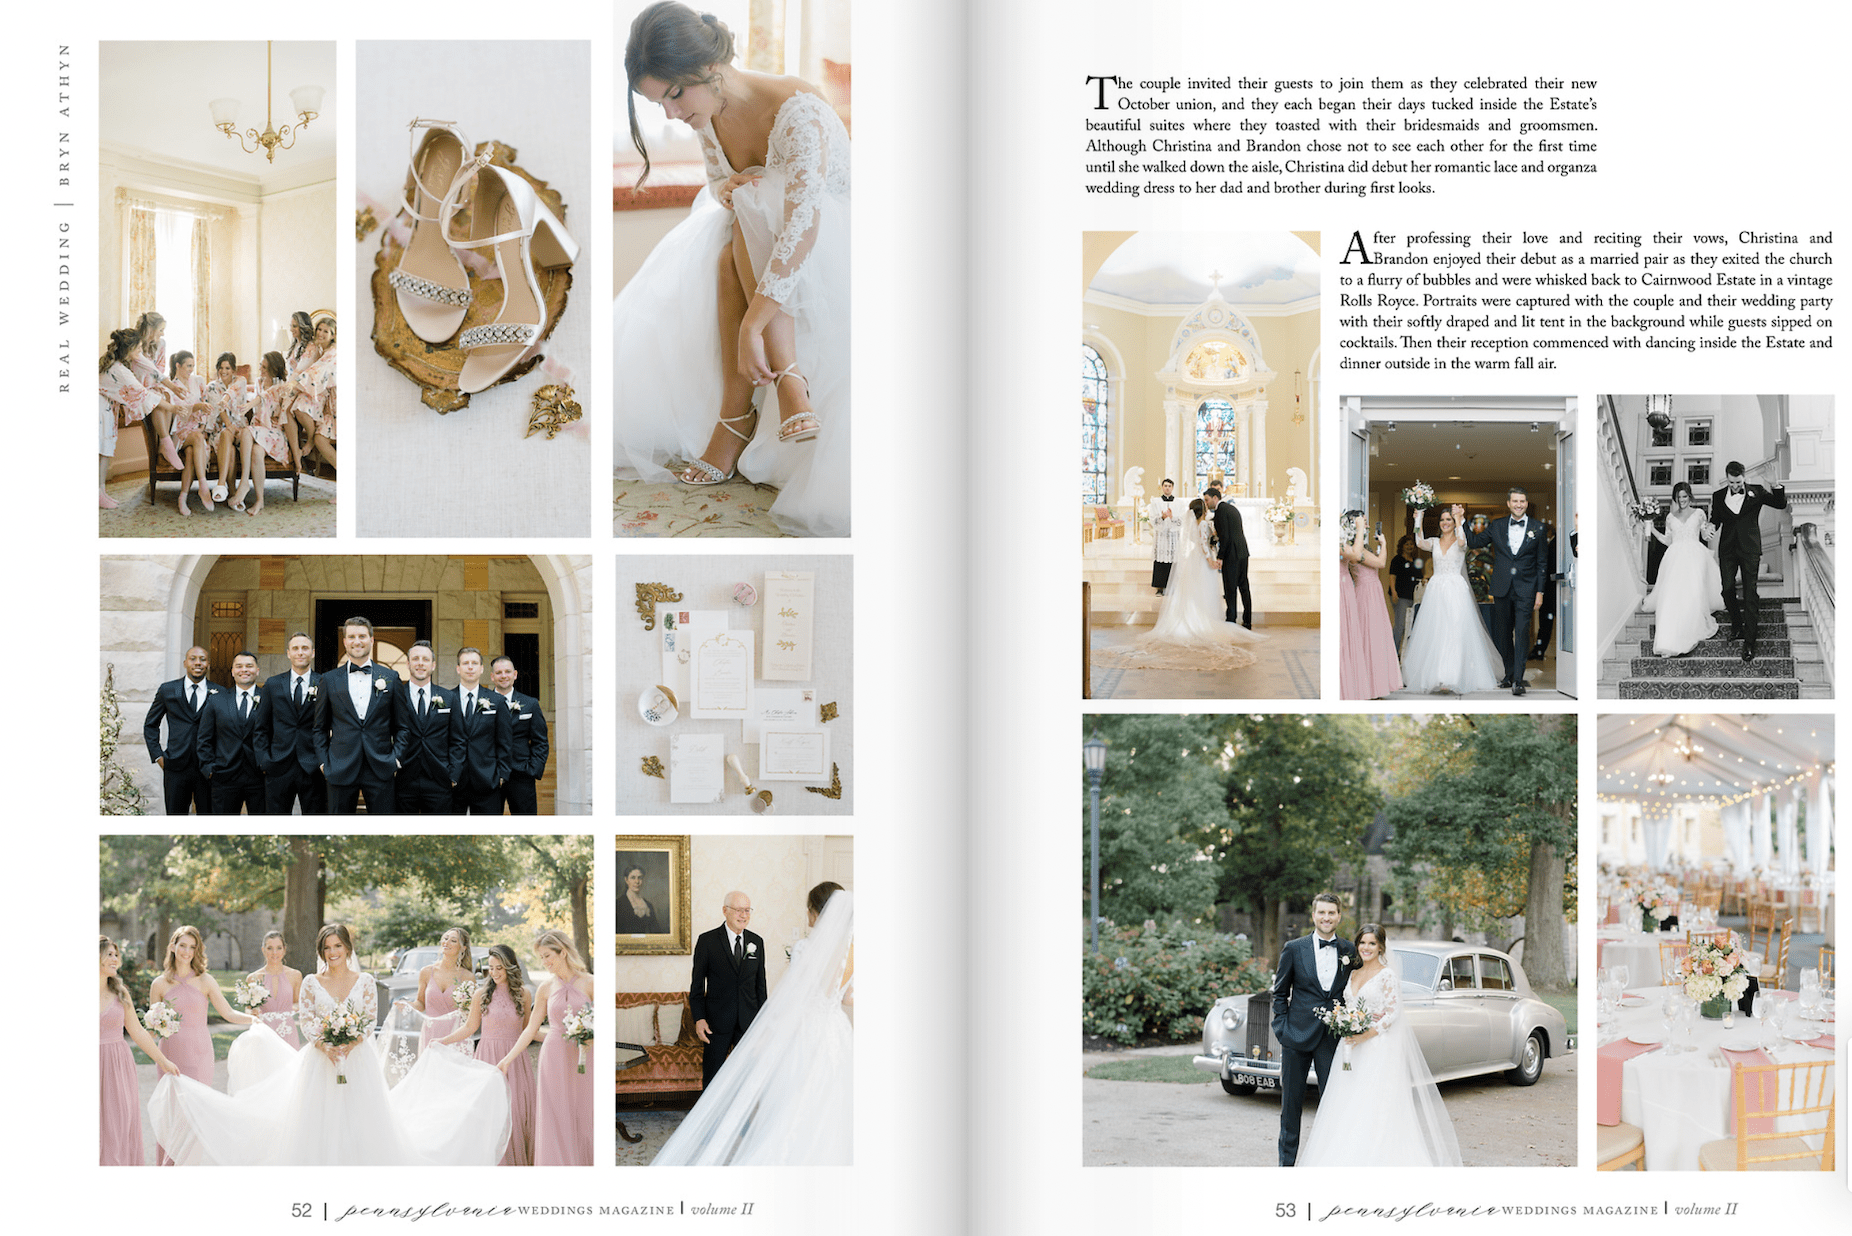 Magazine feature of elegant Cairnwood estate wedding